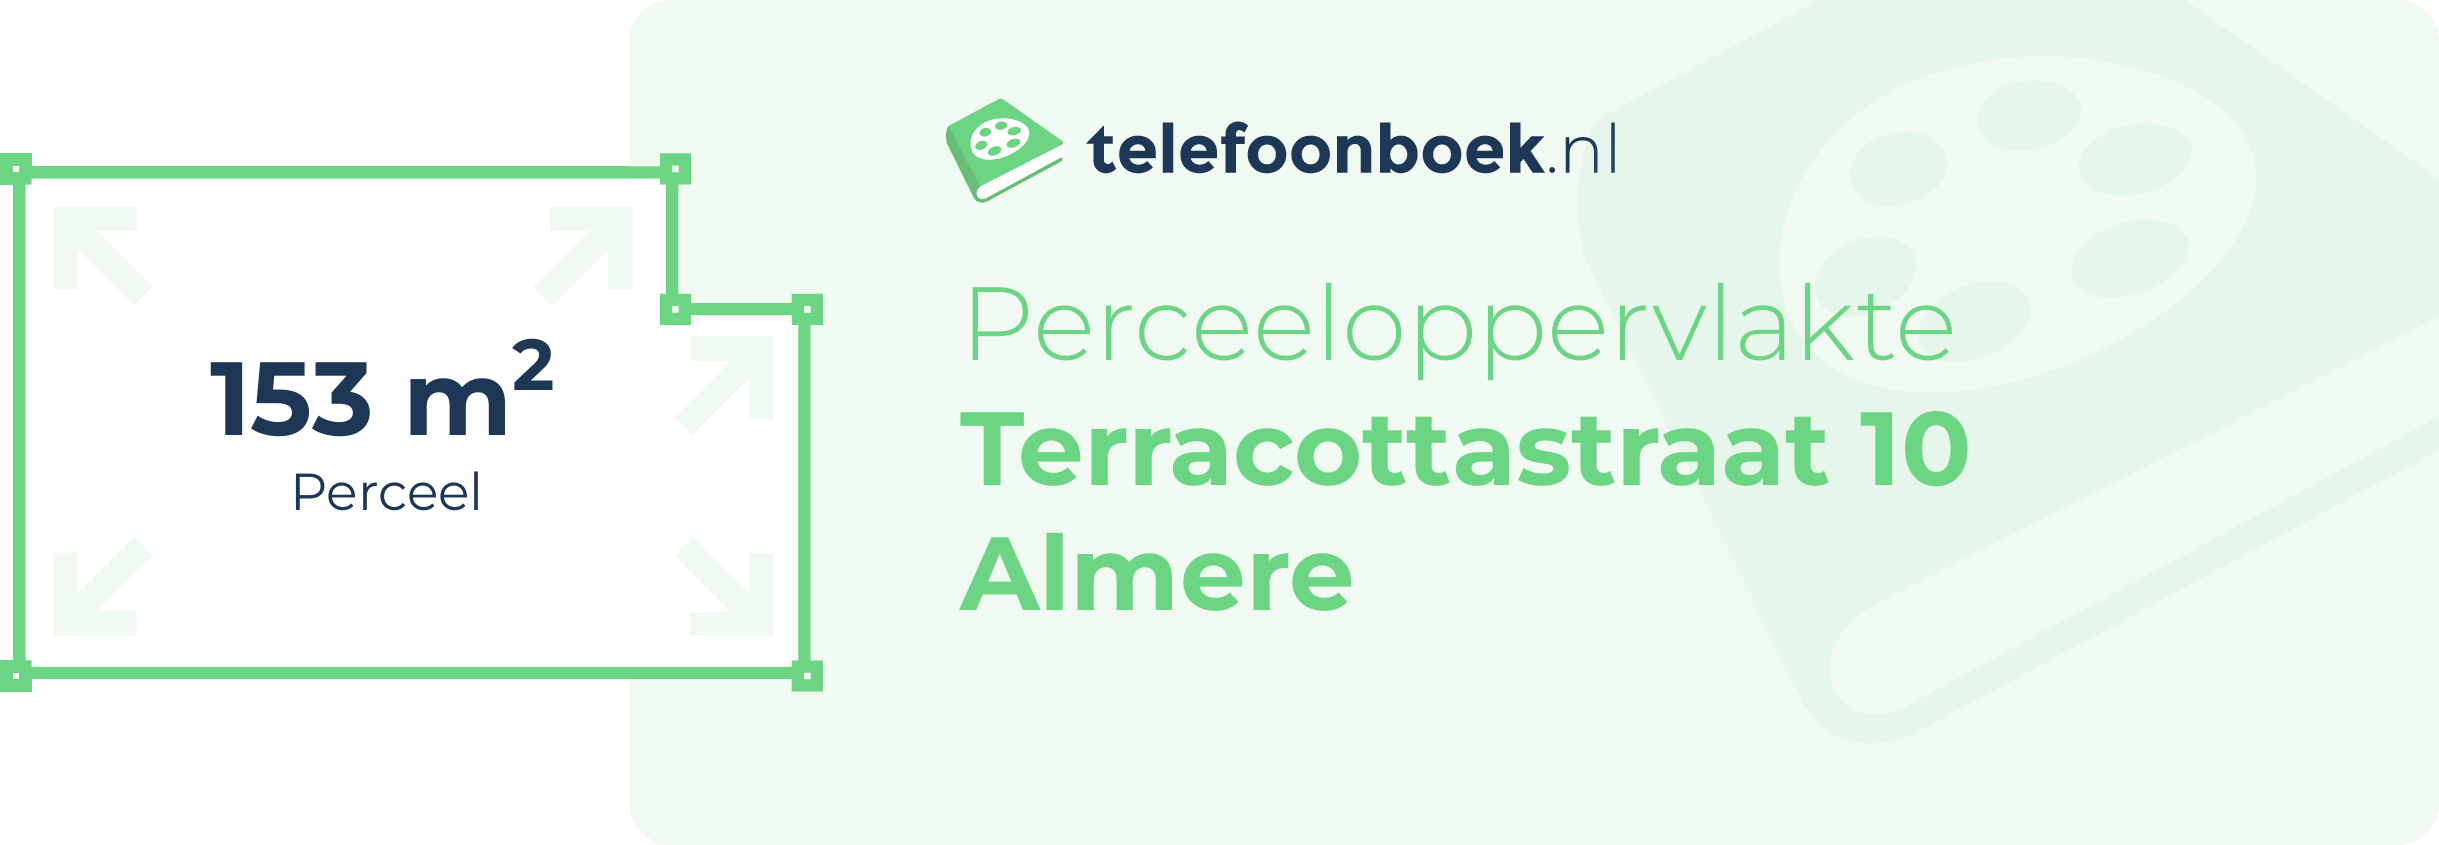 Perceeloppervlakte Terracottastraat 10 Almere